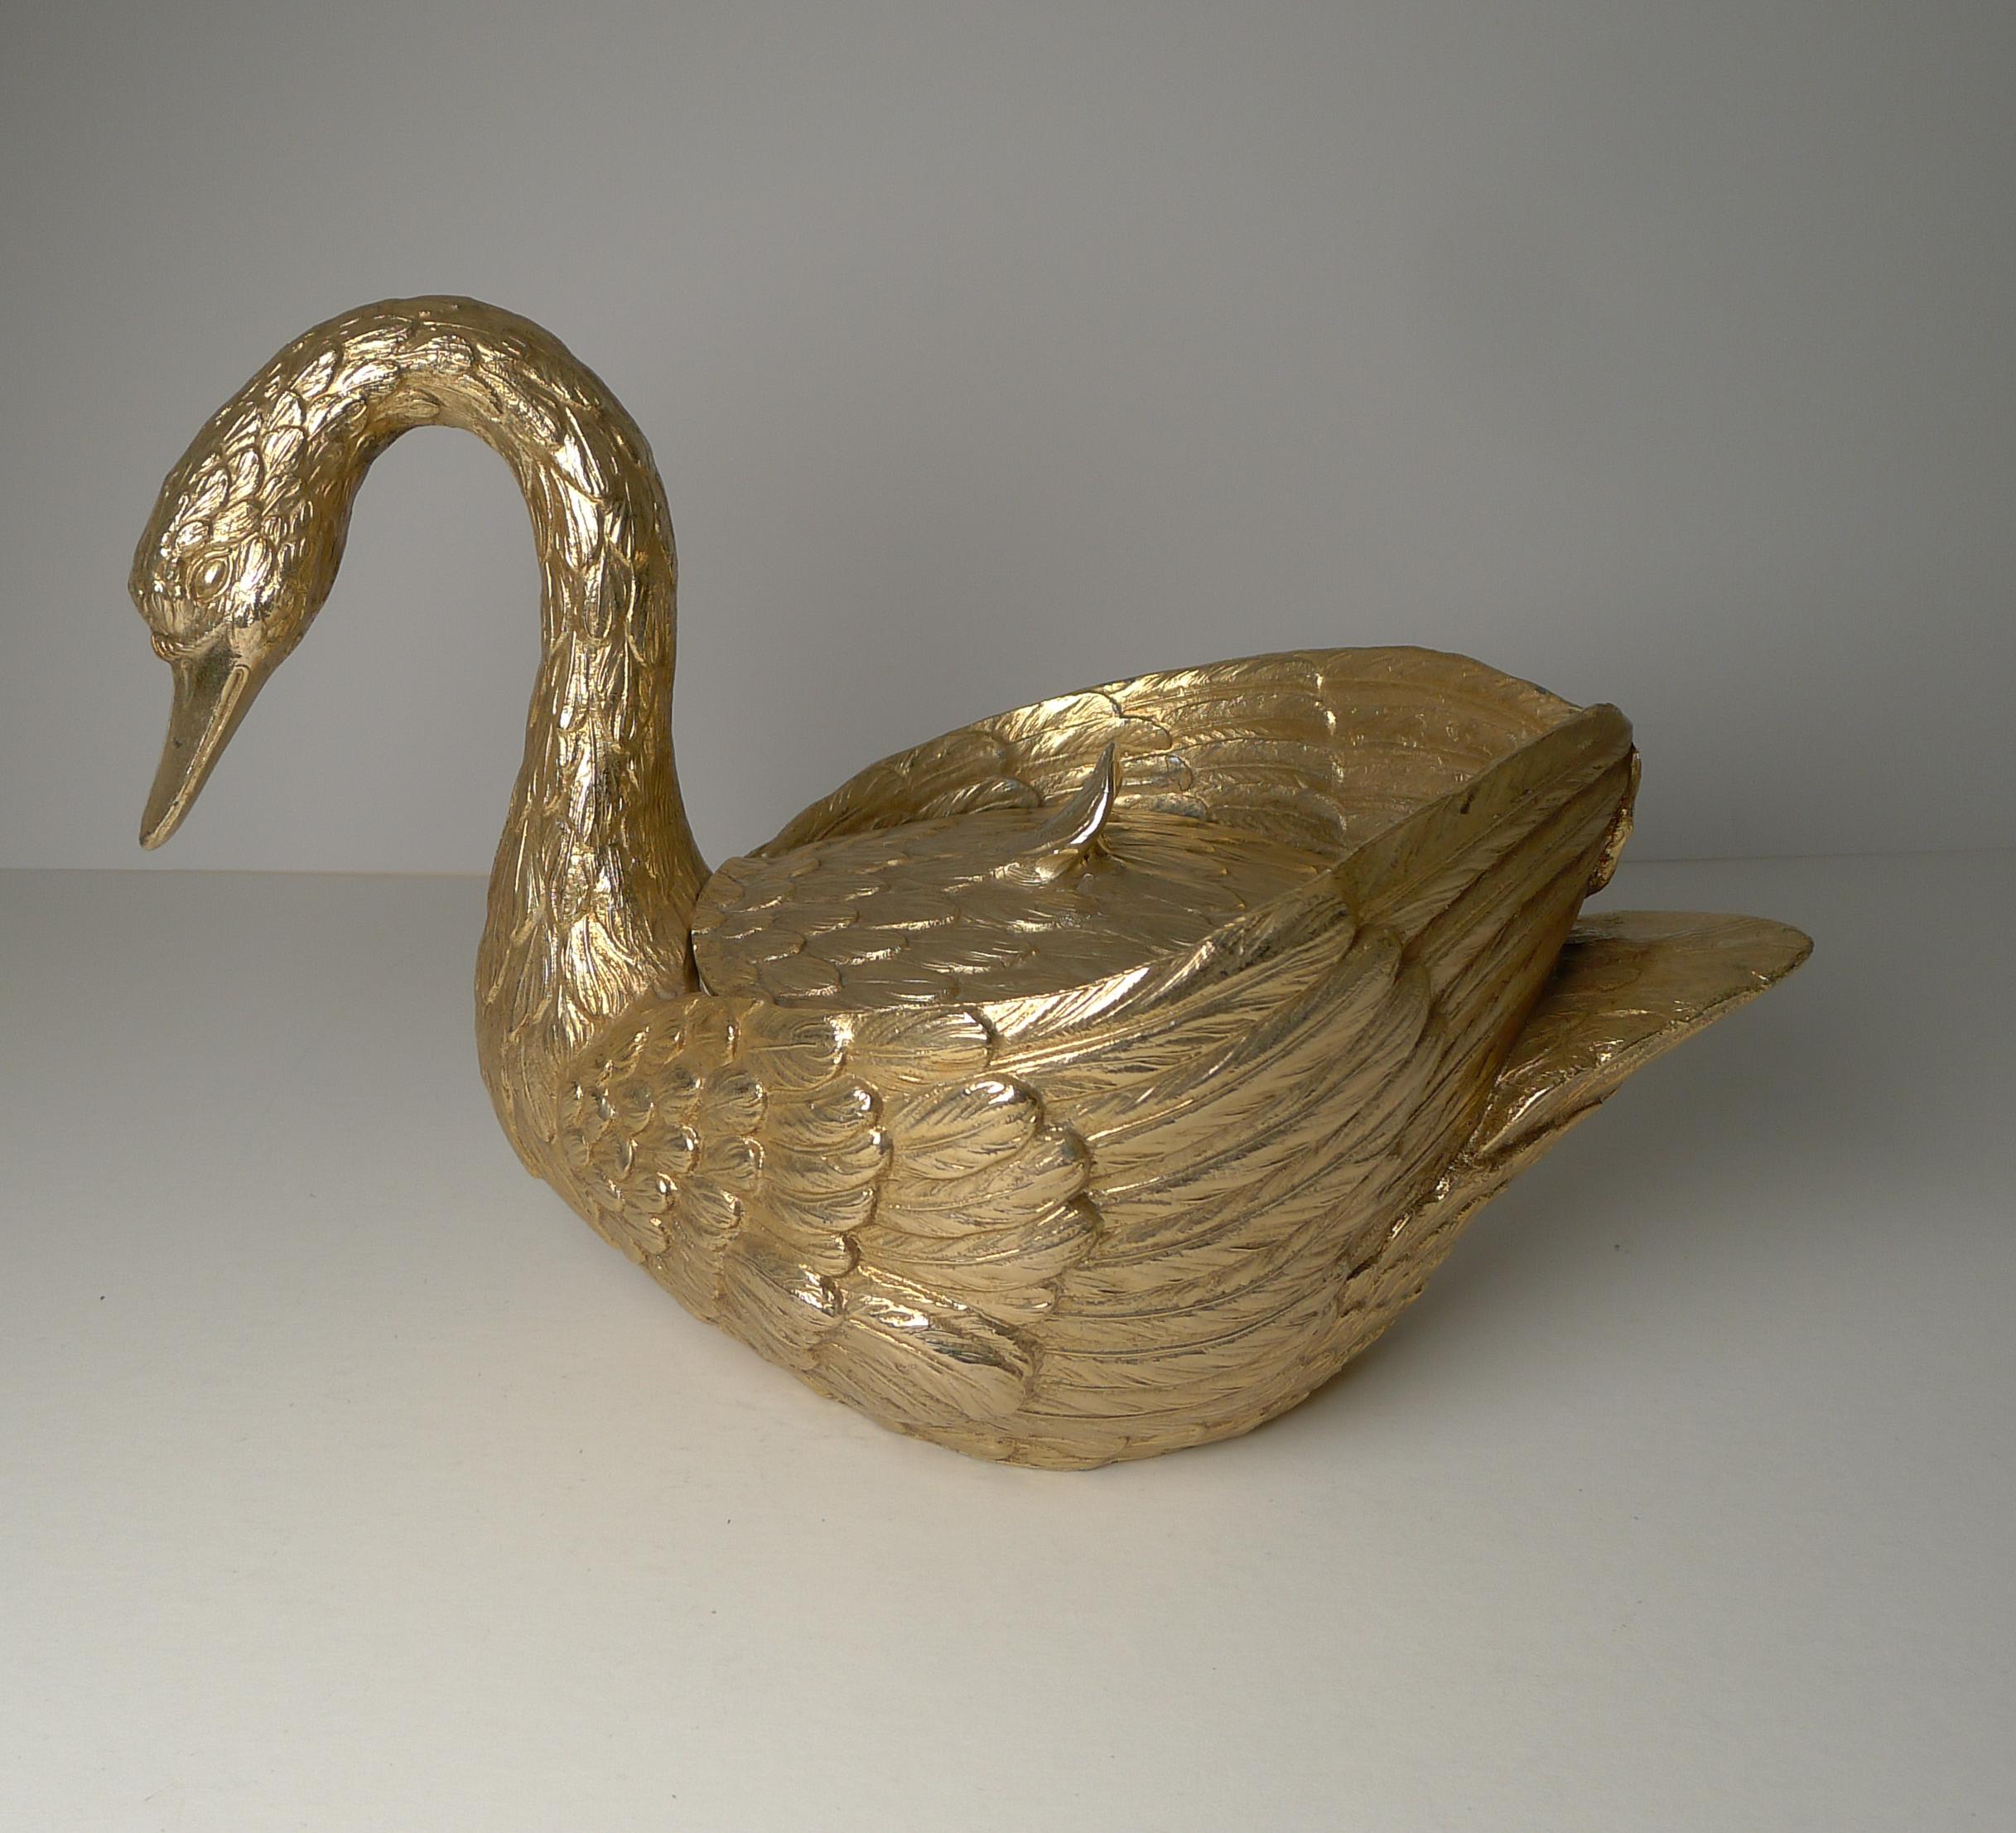 20th Century Mauro Manetti, Florence, Italy, Gold Swan Ice Bucket c.1970